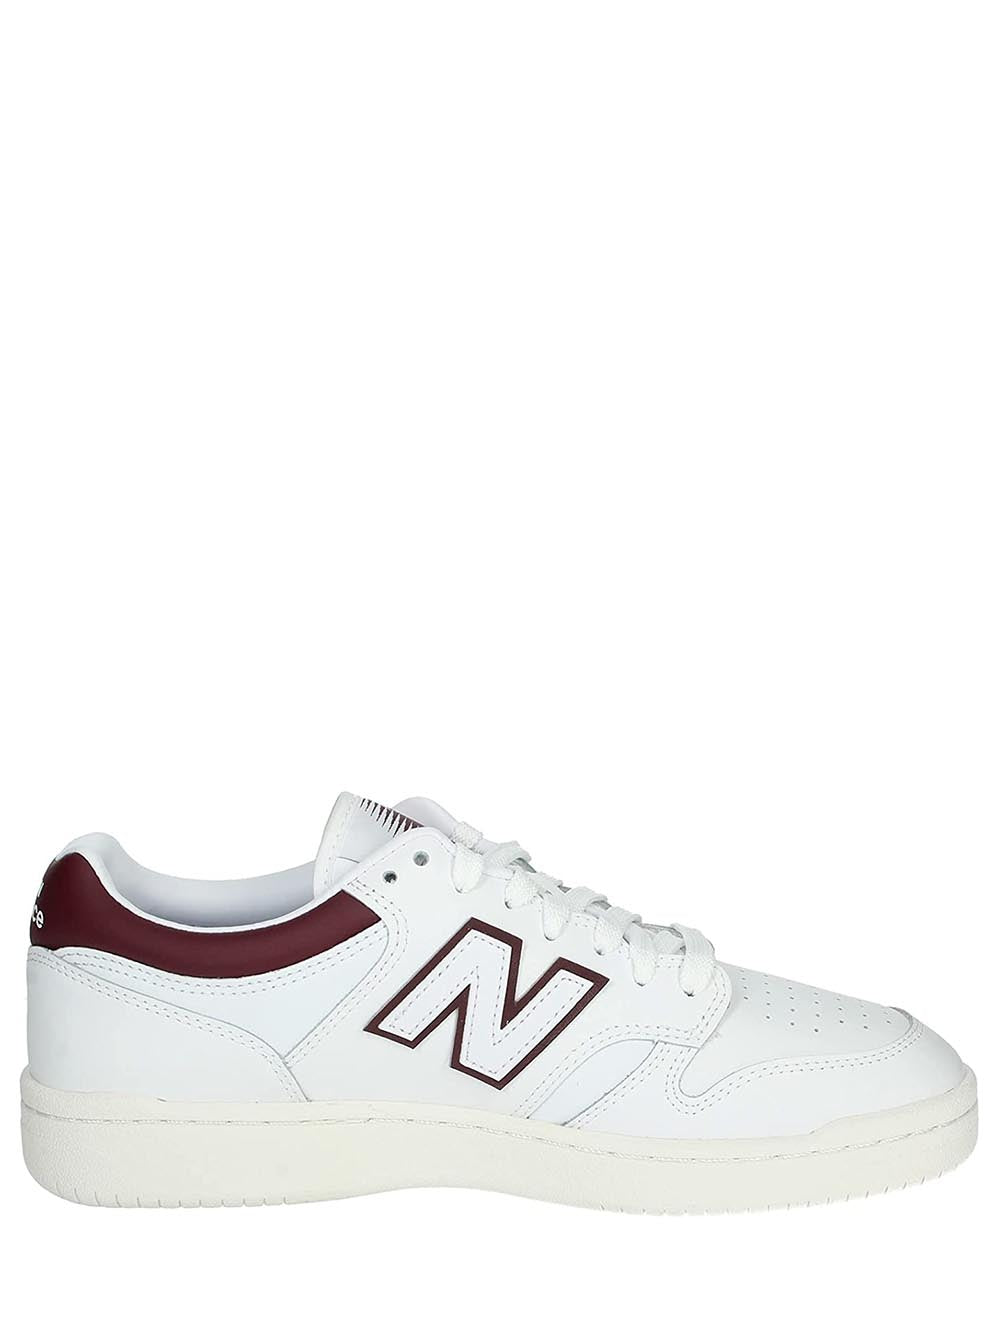 New Balance Sneakers Uomo white BORDEAUX